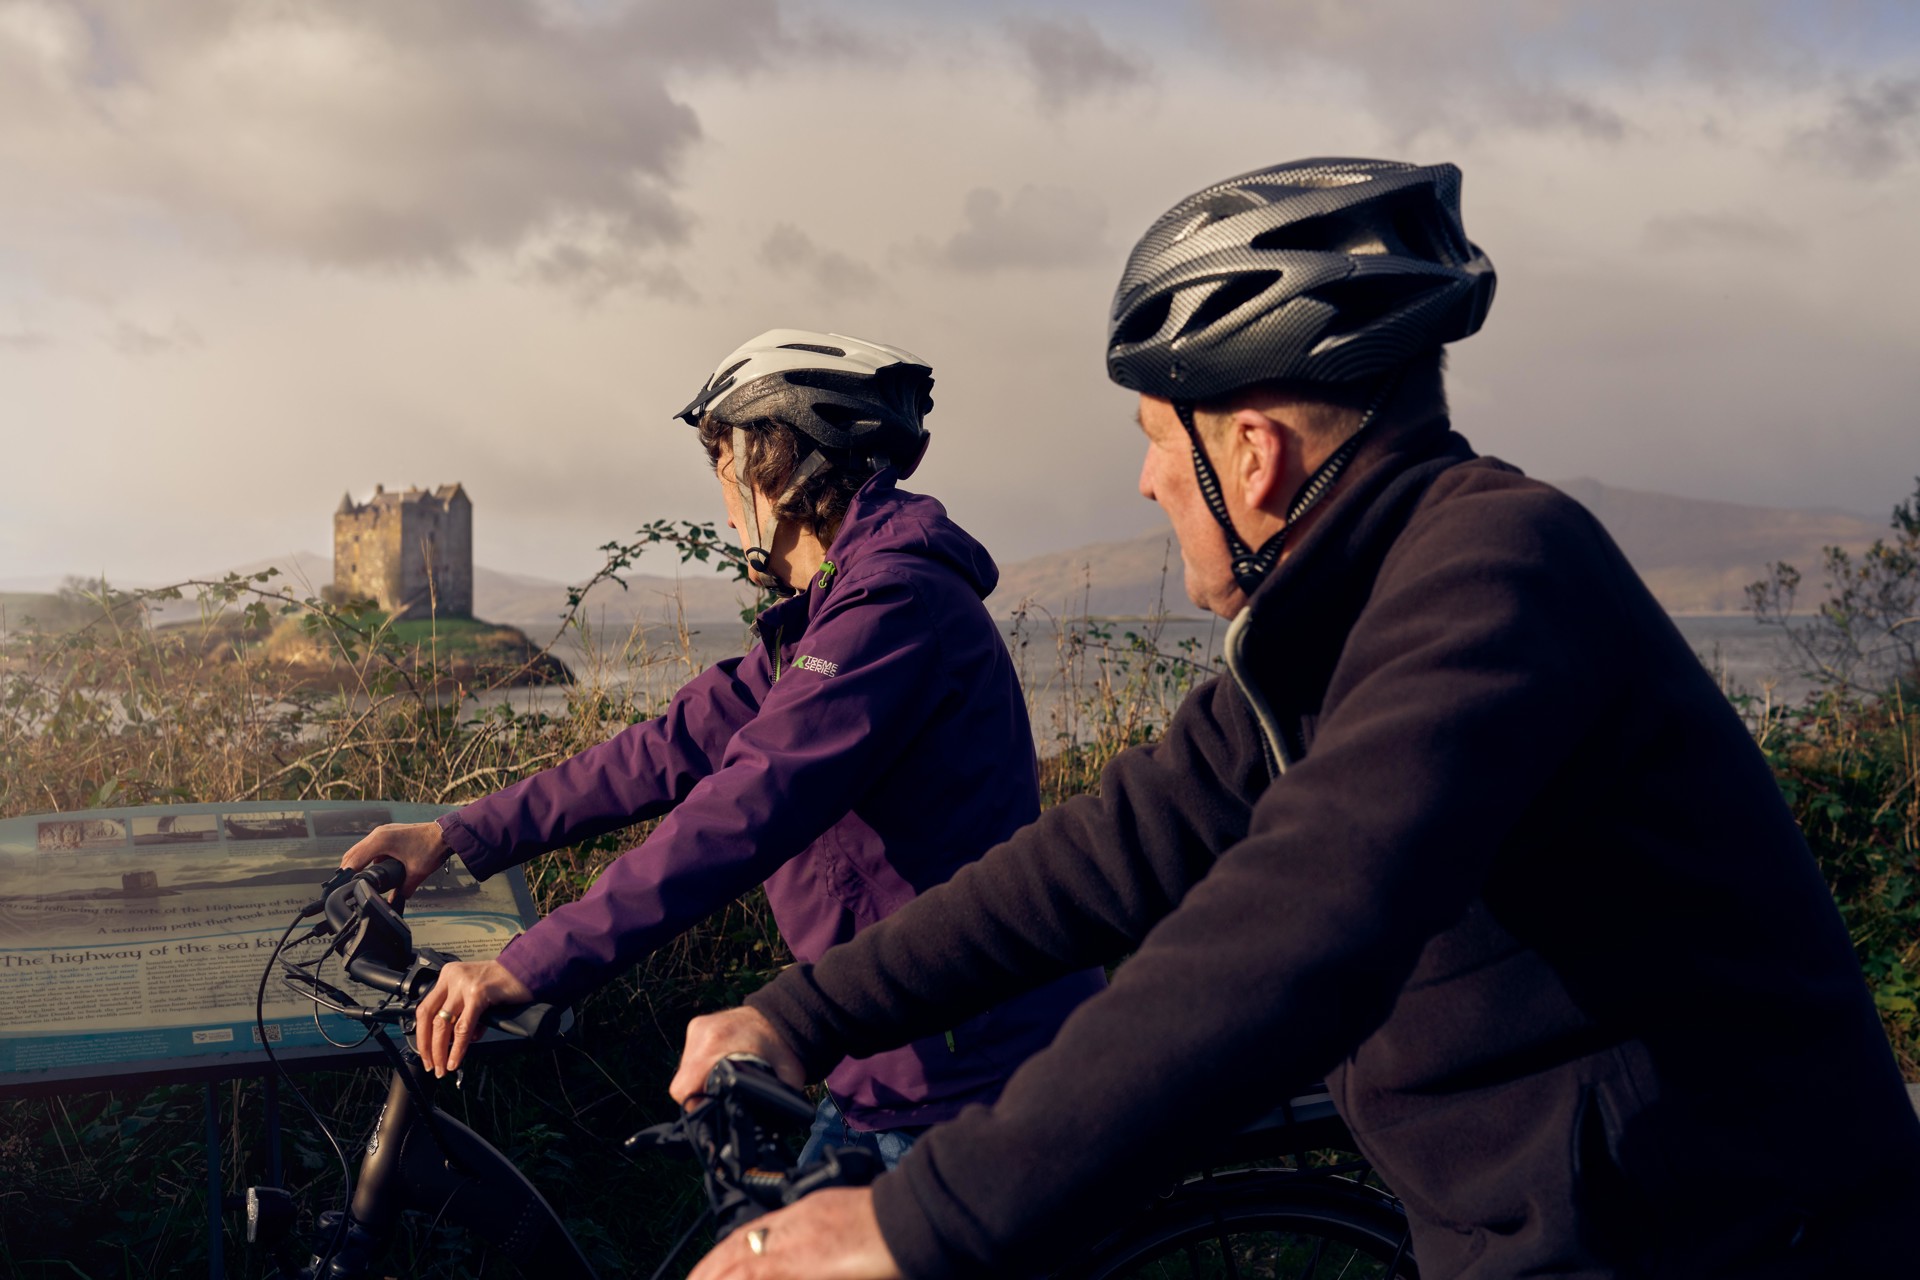 Background image - Bike_Cycling_Castle Stalker_StephenSweeneyPhotography